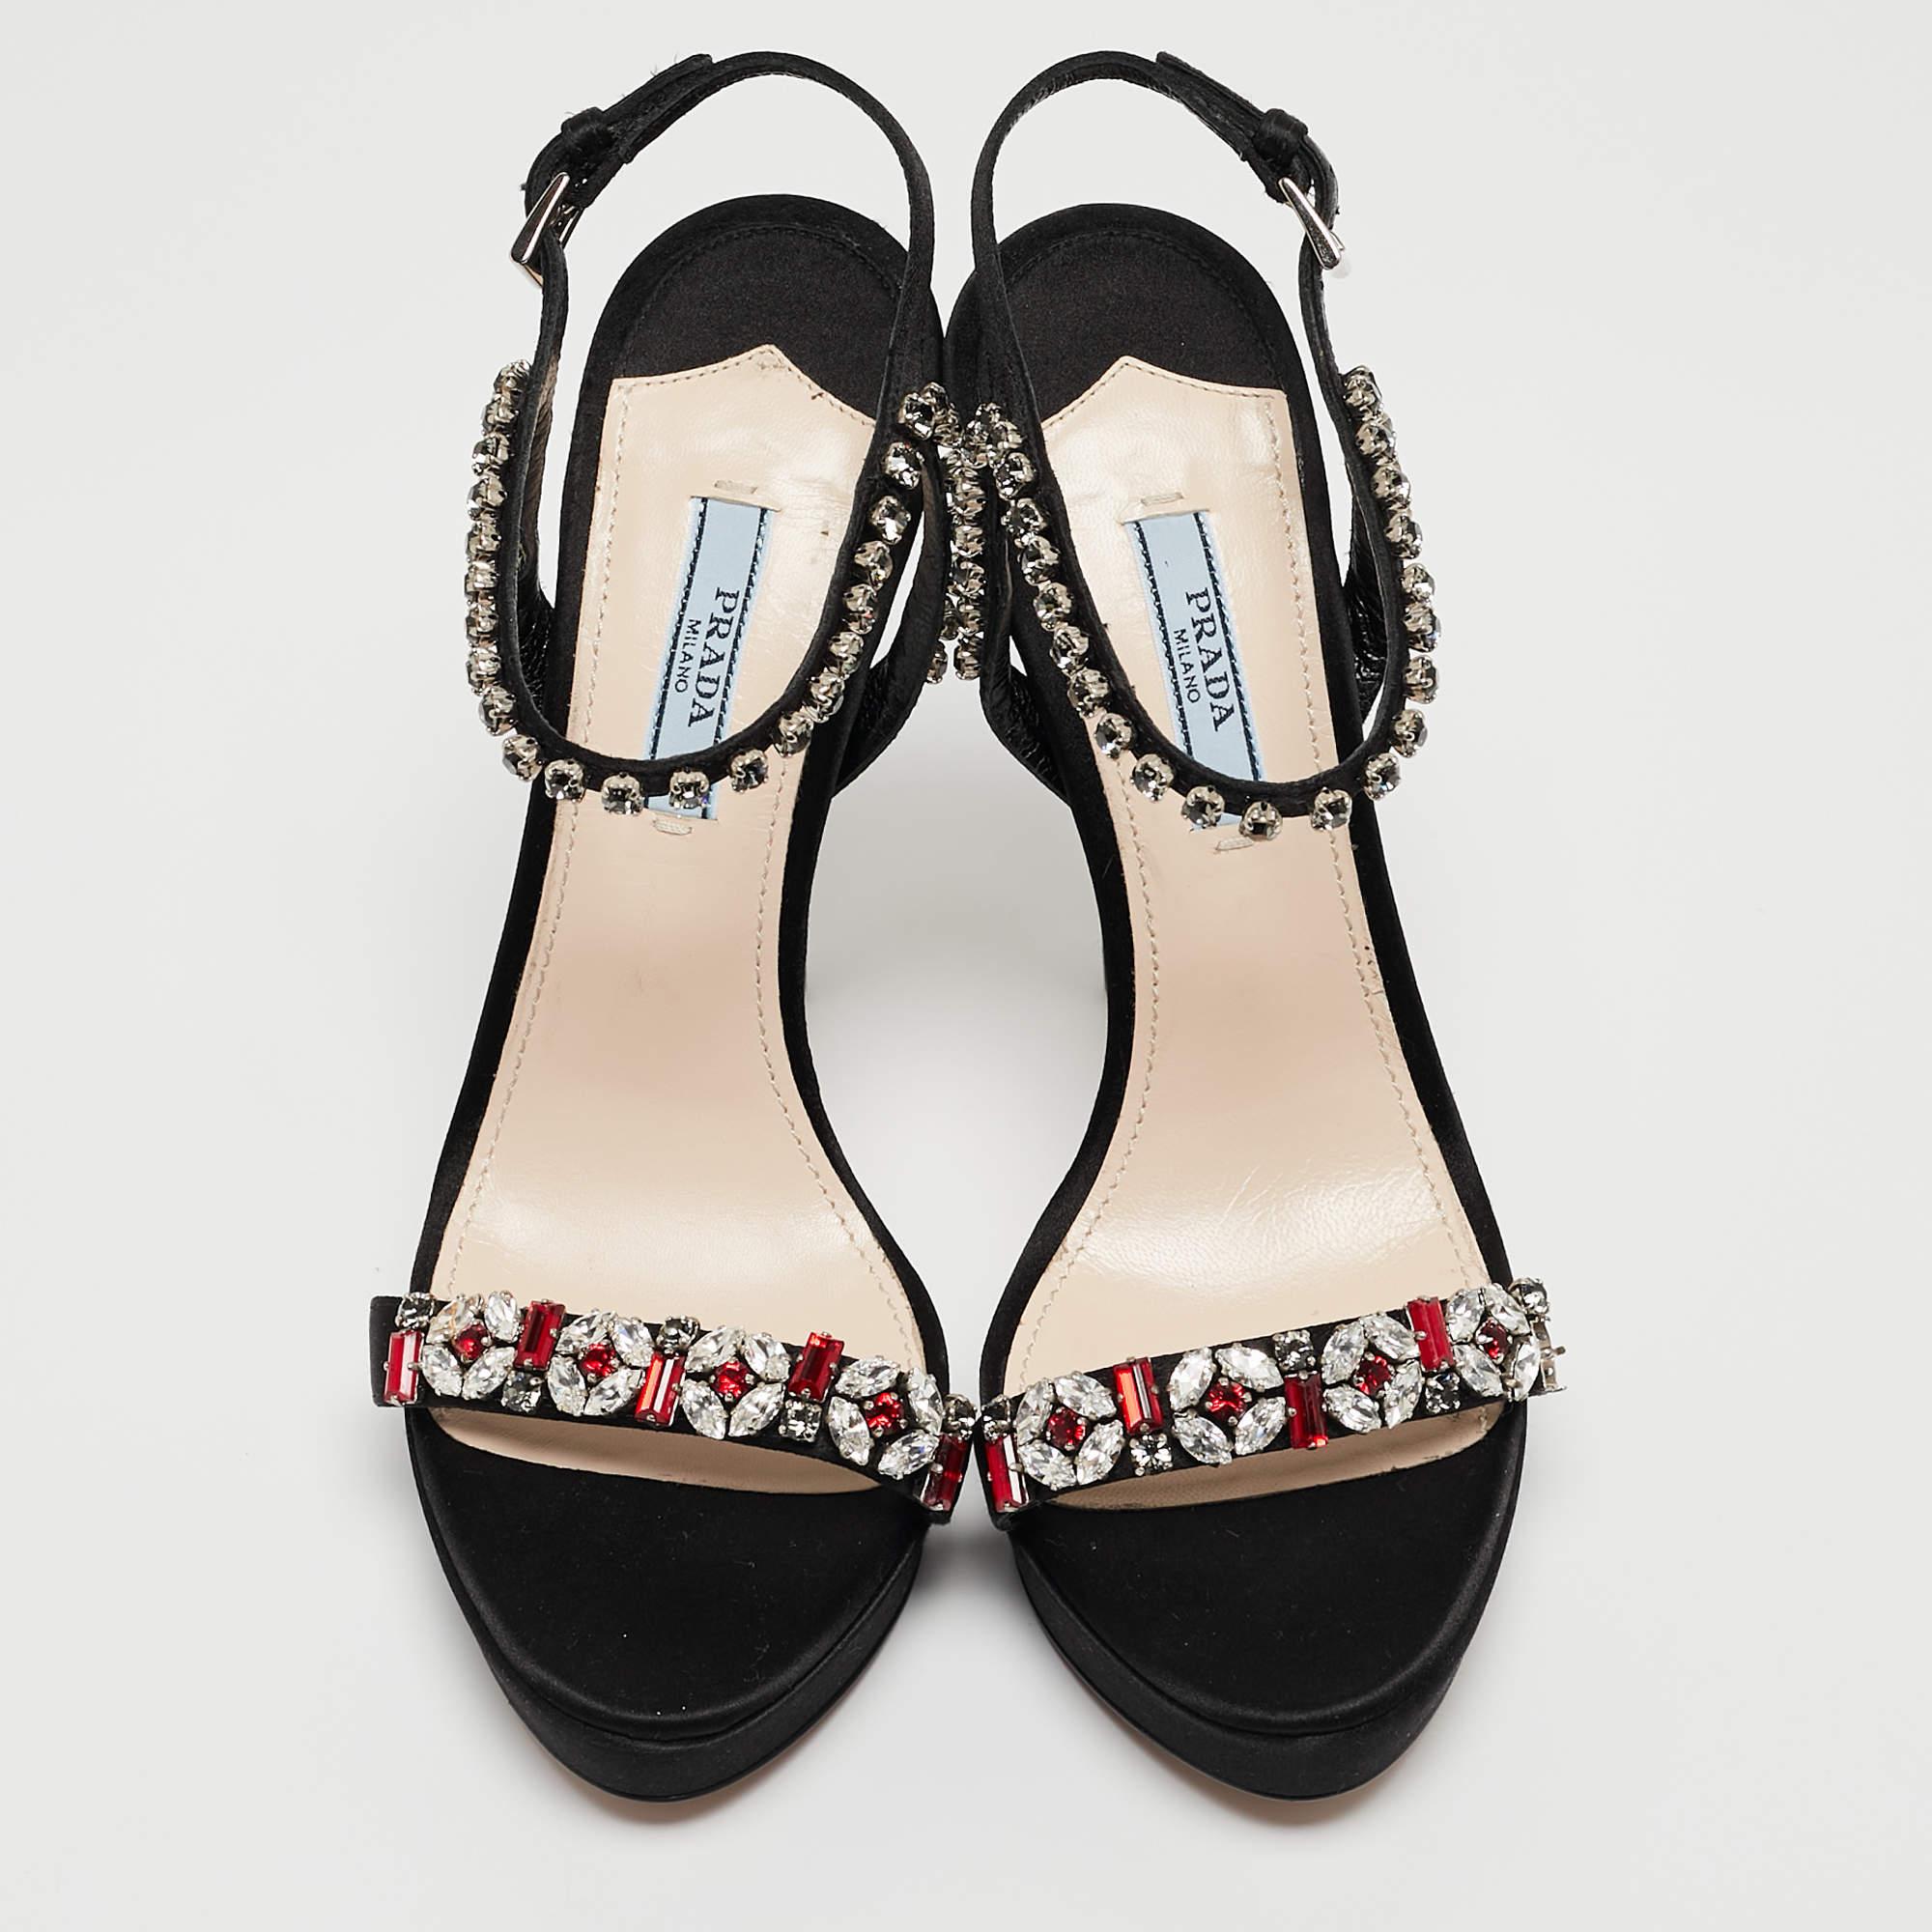 Prada Black Satin Crystal Embellished Ankle Strap Sandals Size 37 In Good Condition For Sale In Dubai, Al Qouz 2